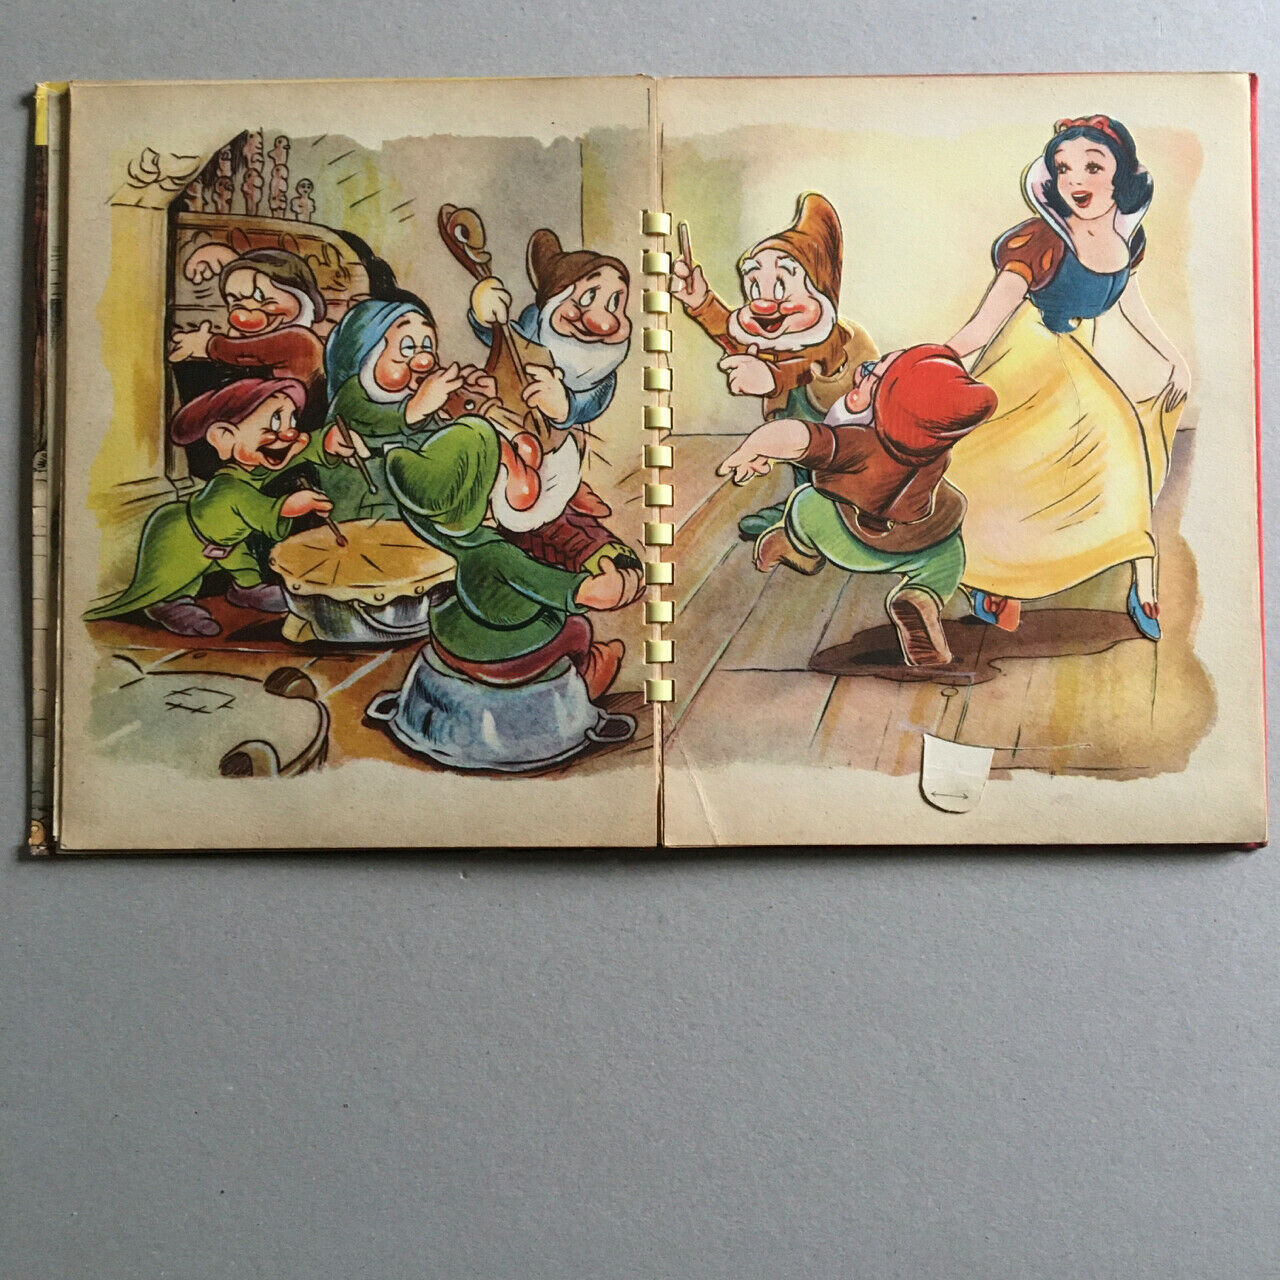 WALT DISNEY - Snow White - Album HOP-LA! - Hatchet - 1950.